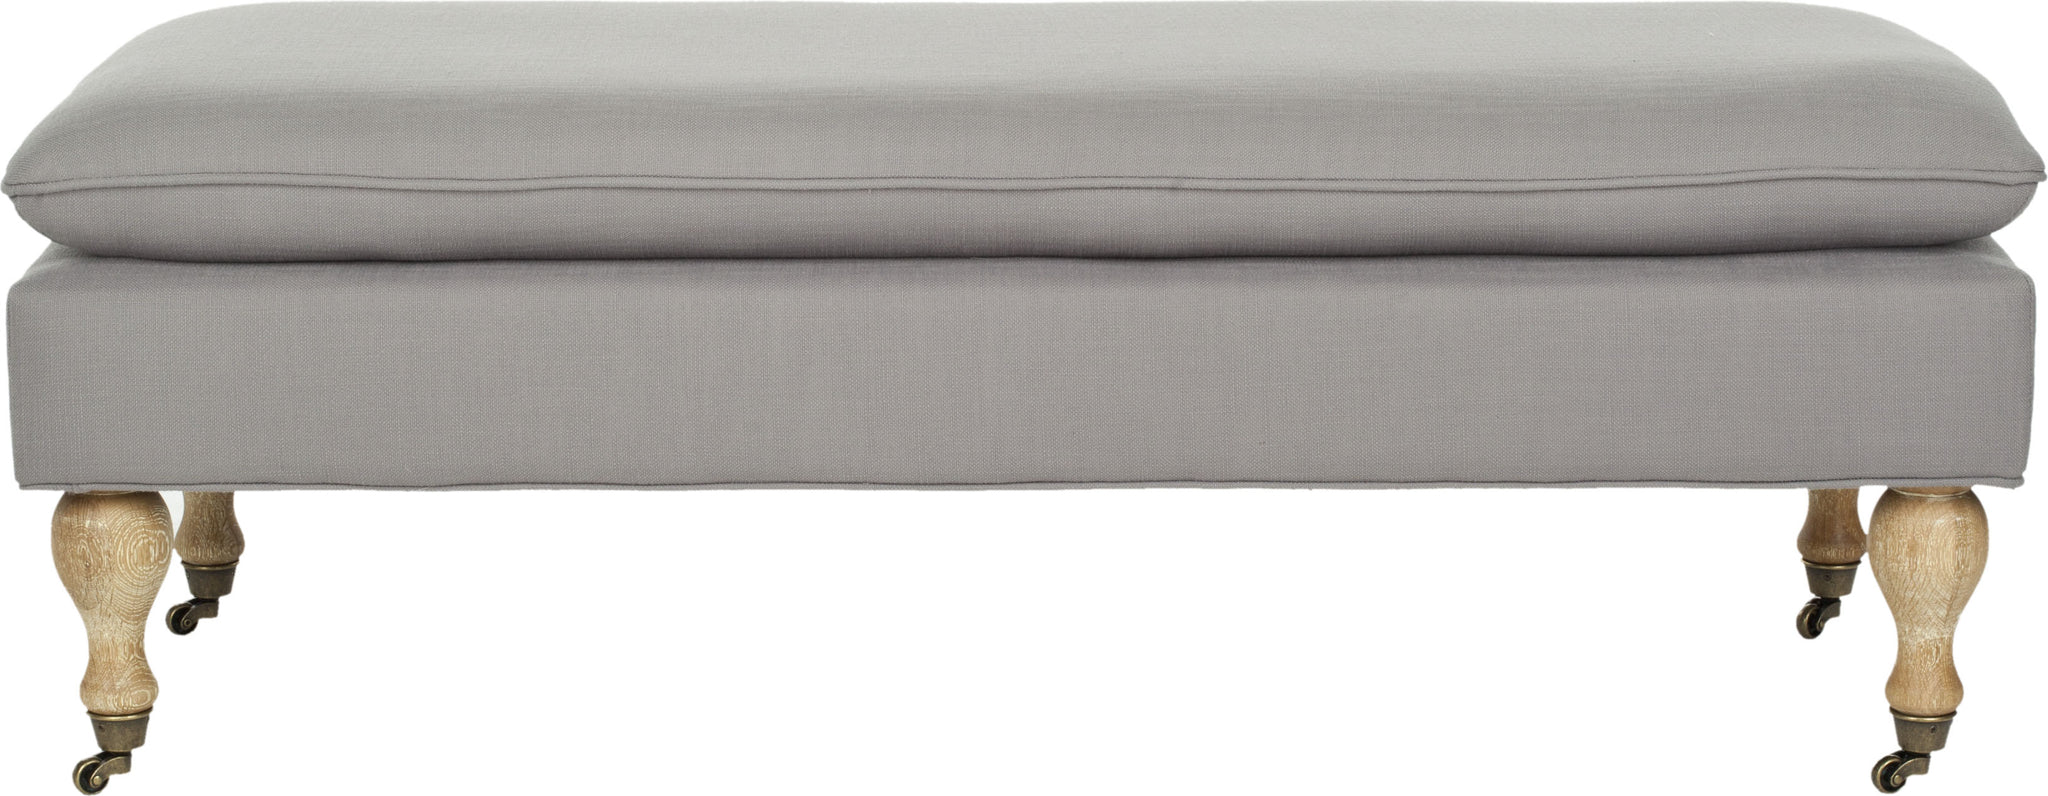 Safavieh Hampton Pillowtop Bench Arctic Grey and Pickled Oak Furniture main image